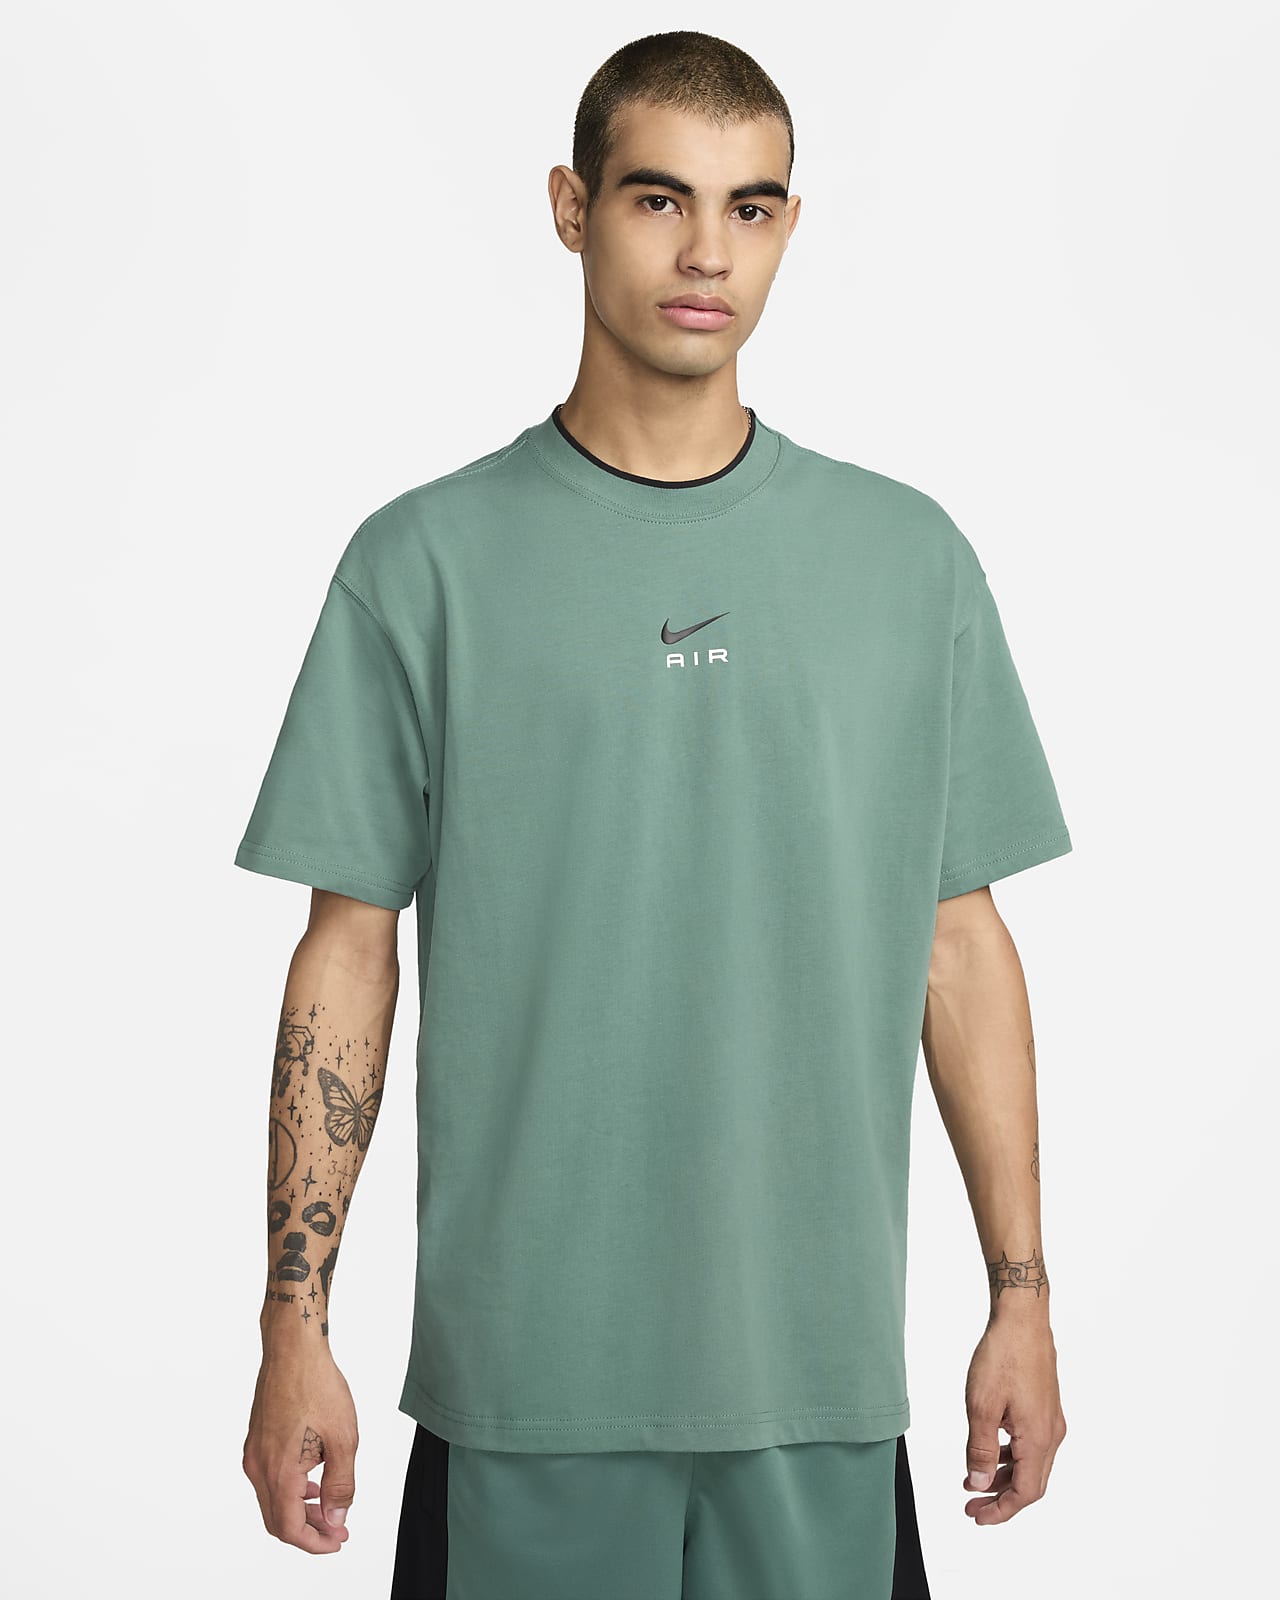 Nike Air Erkek Tişörtü